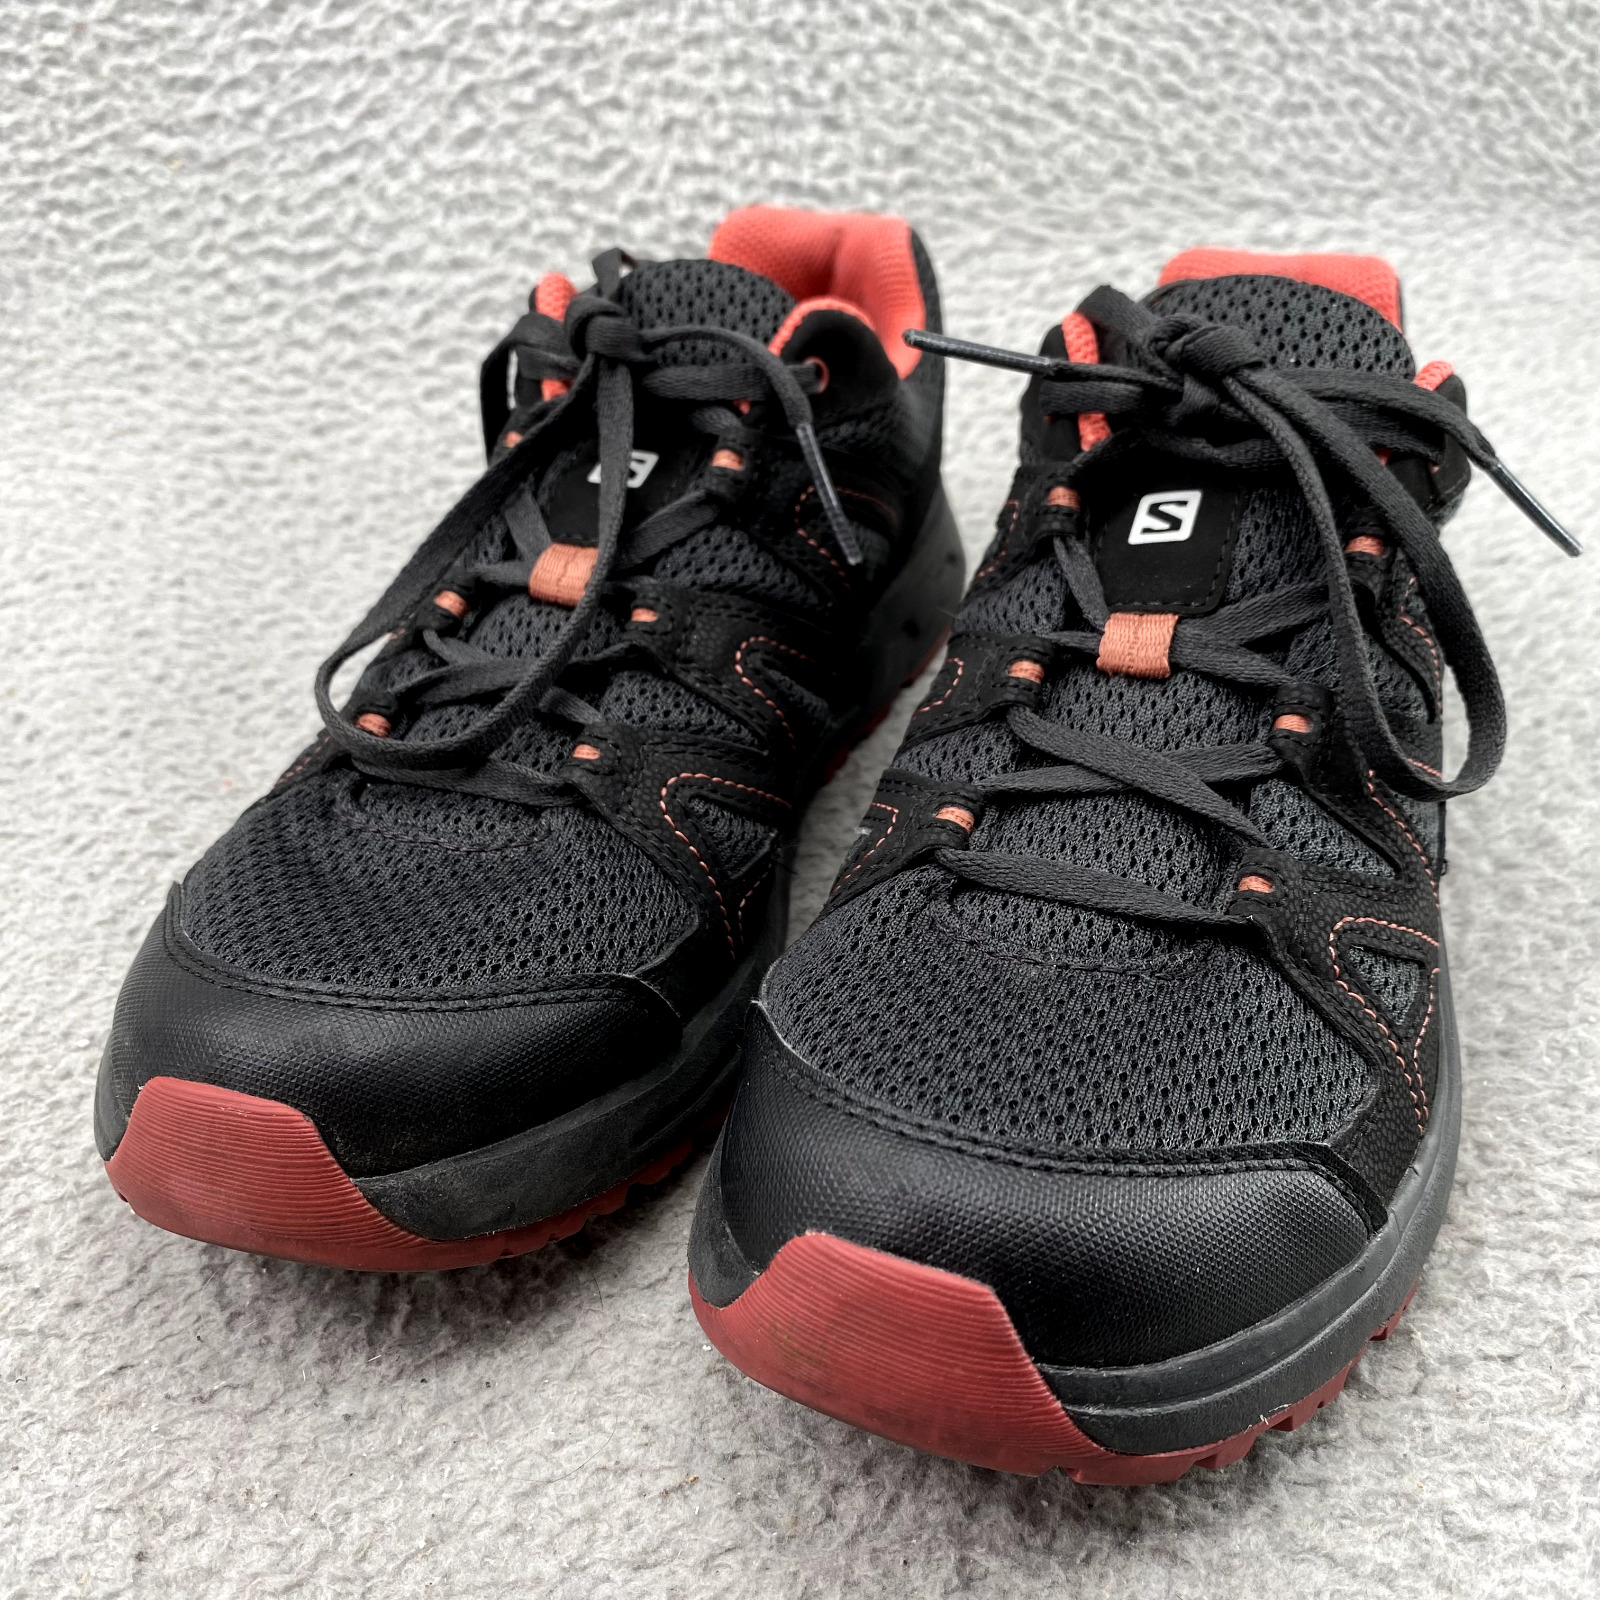 Salomon Shoes Adult 8.5 Black Pink Blackstonia Hiking Outdoor Trail Sneaker Mens